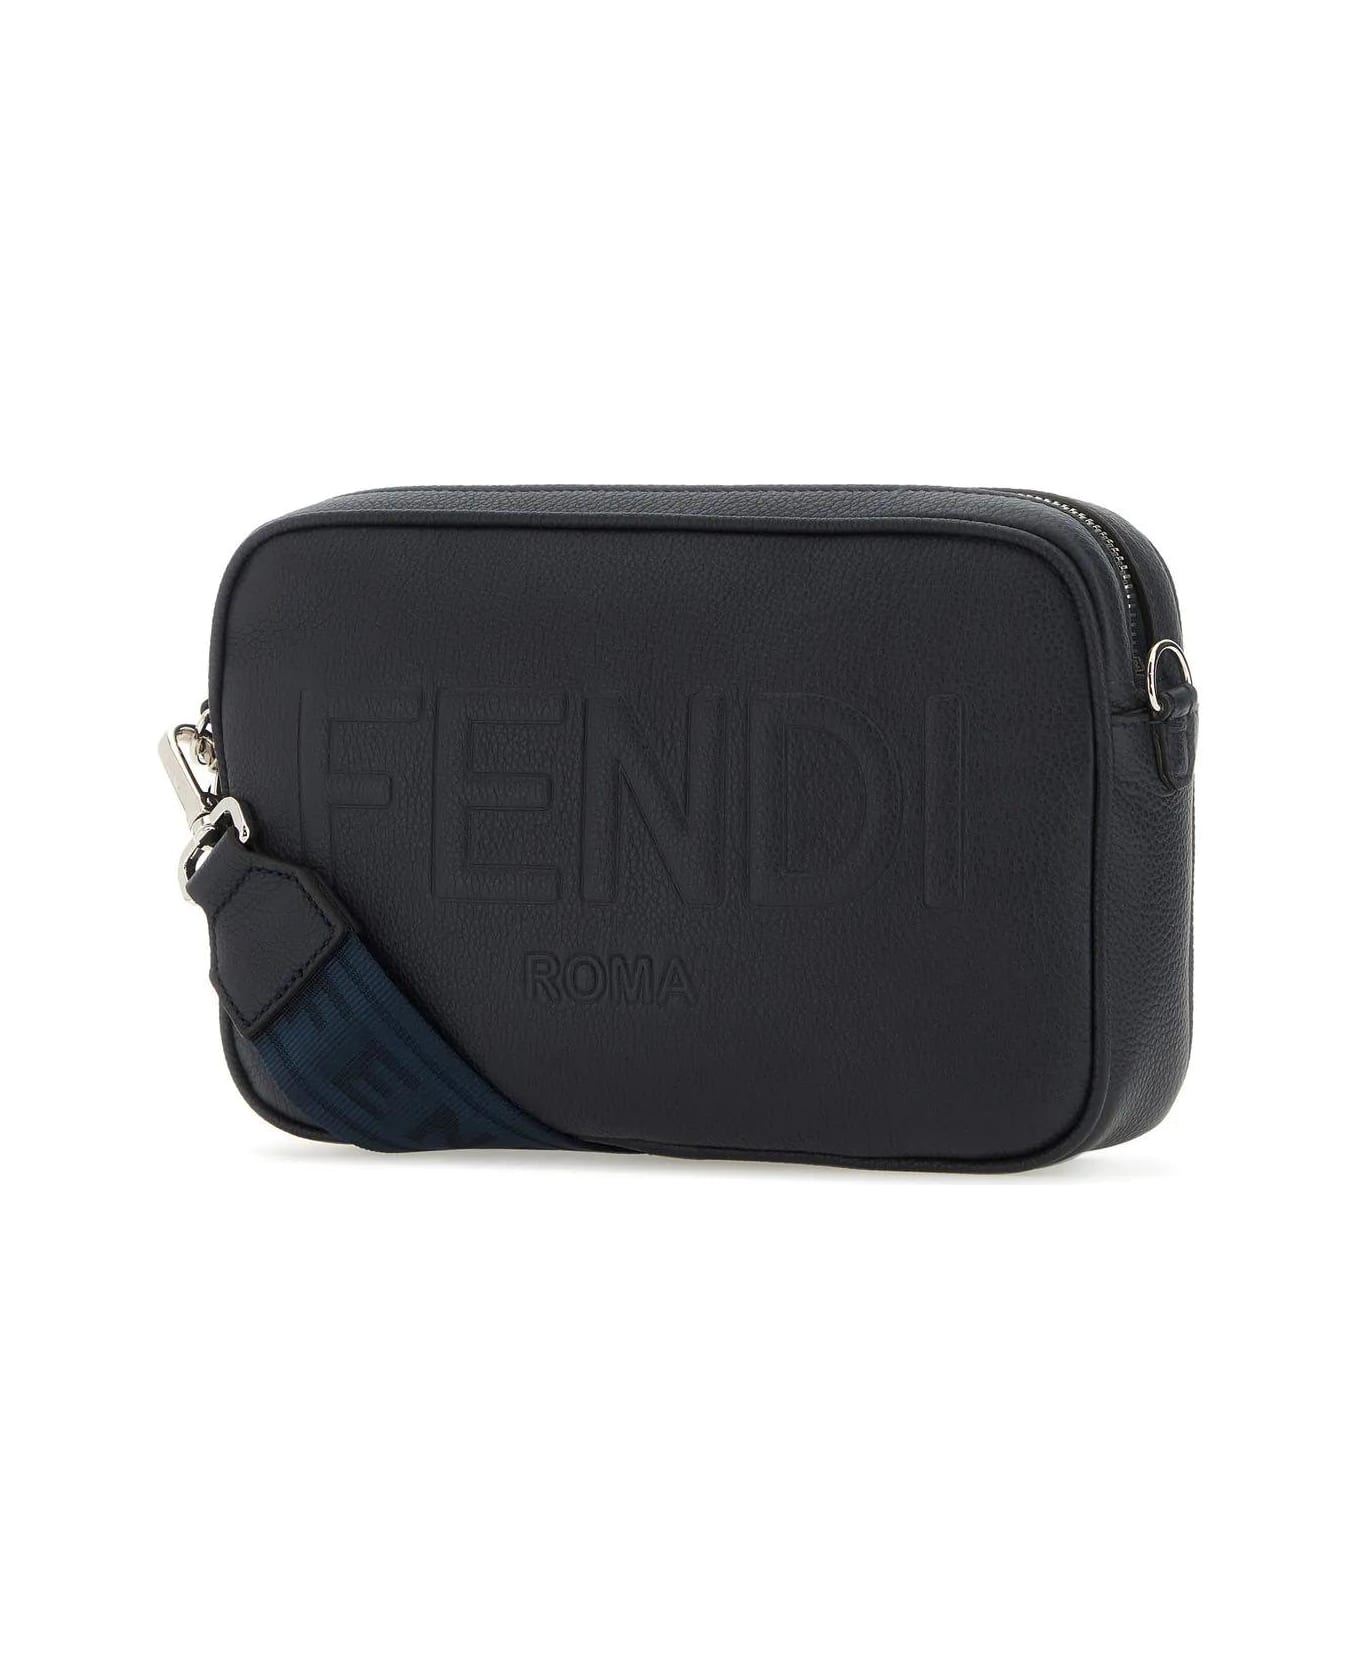 Fendi Navy Blue Leather Camera Case Crossbody Bag - NAVY